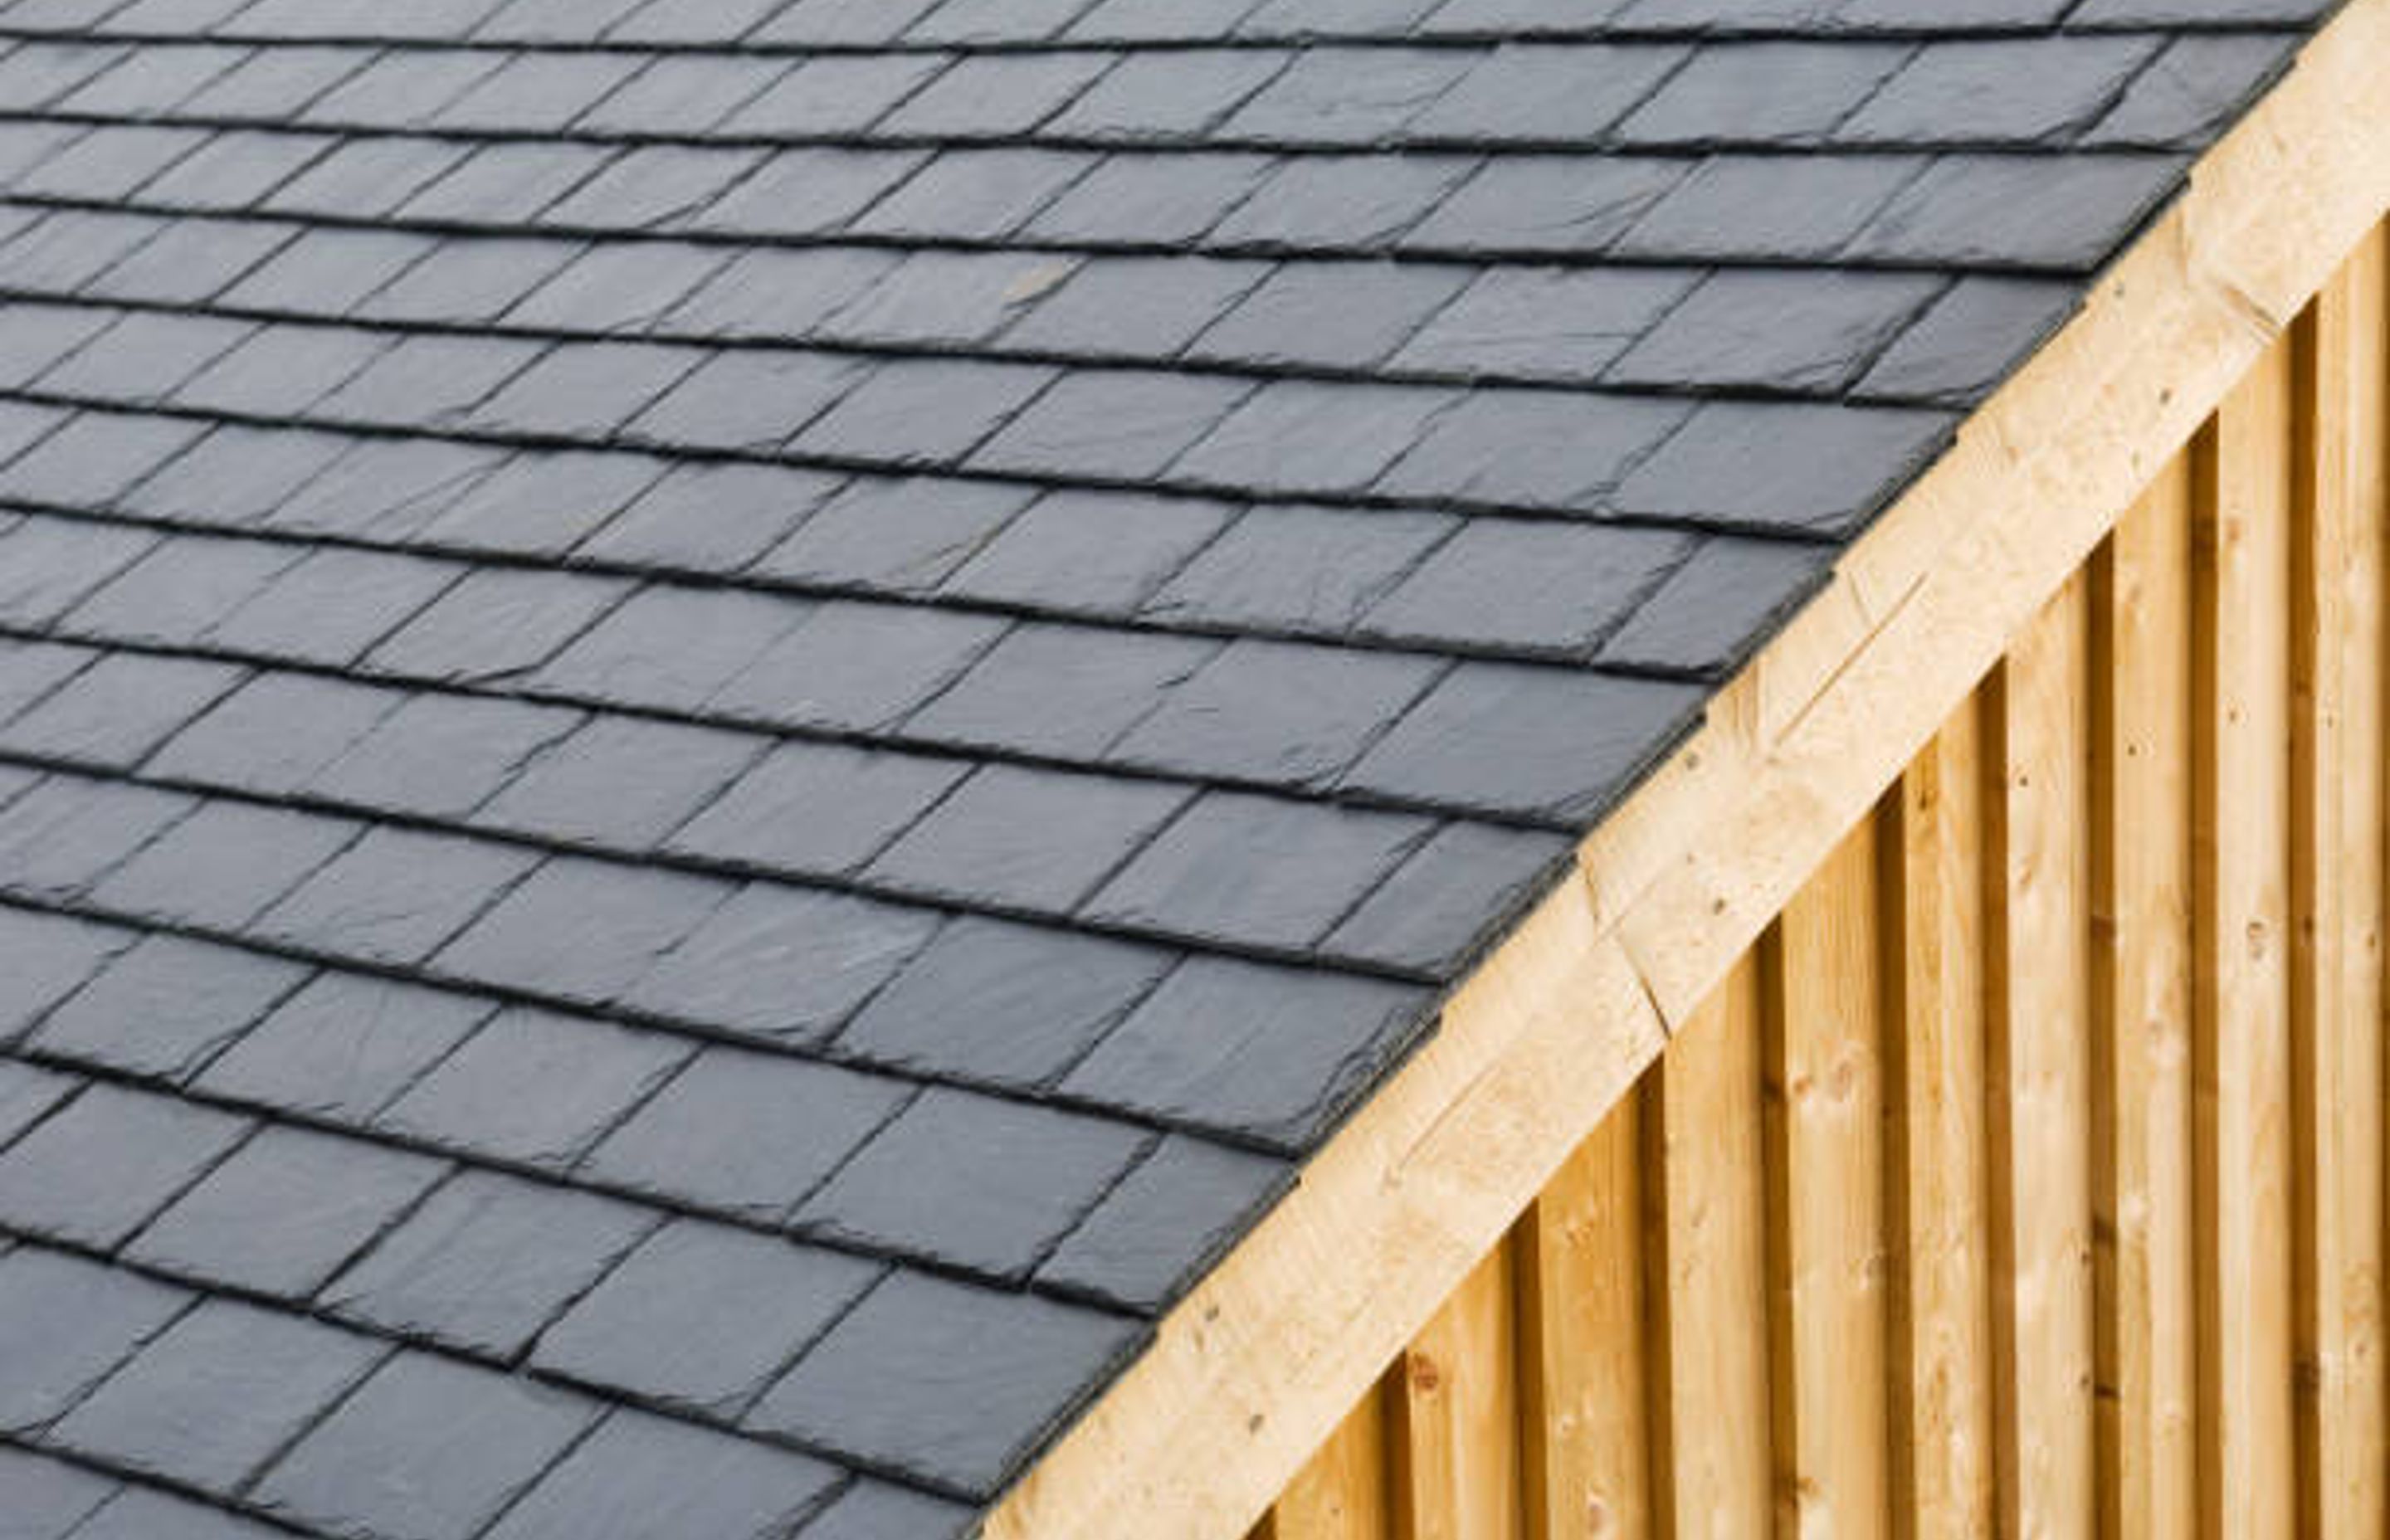 Slate tiles used on roof | Photo Credit – iStock